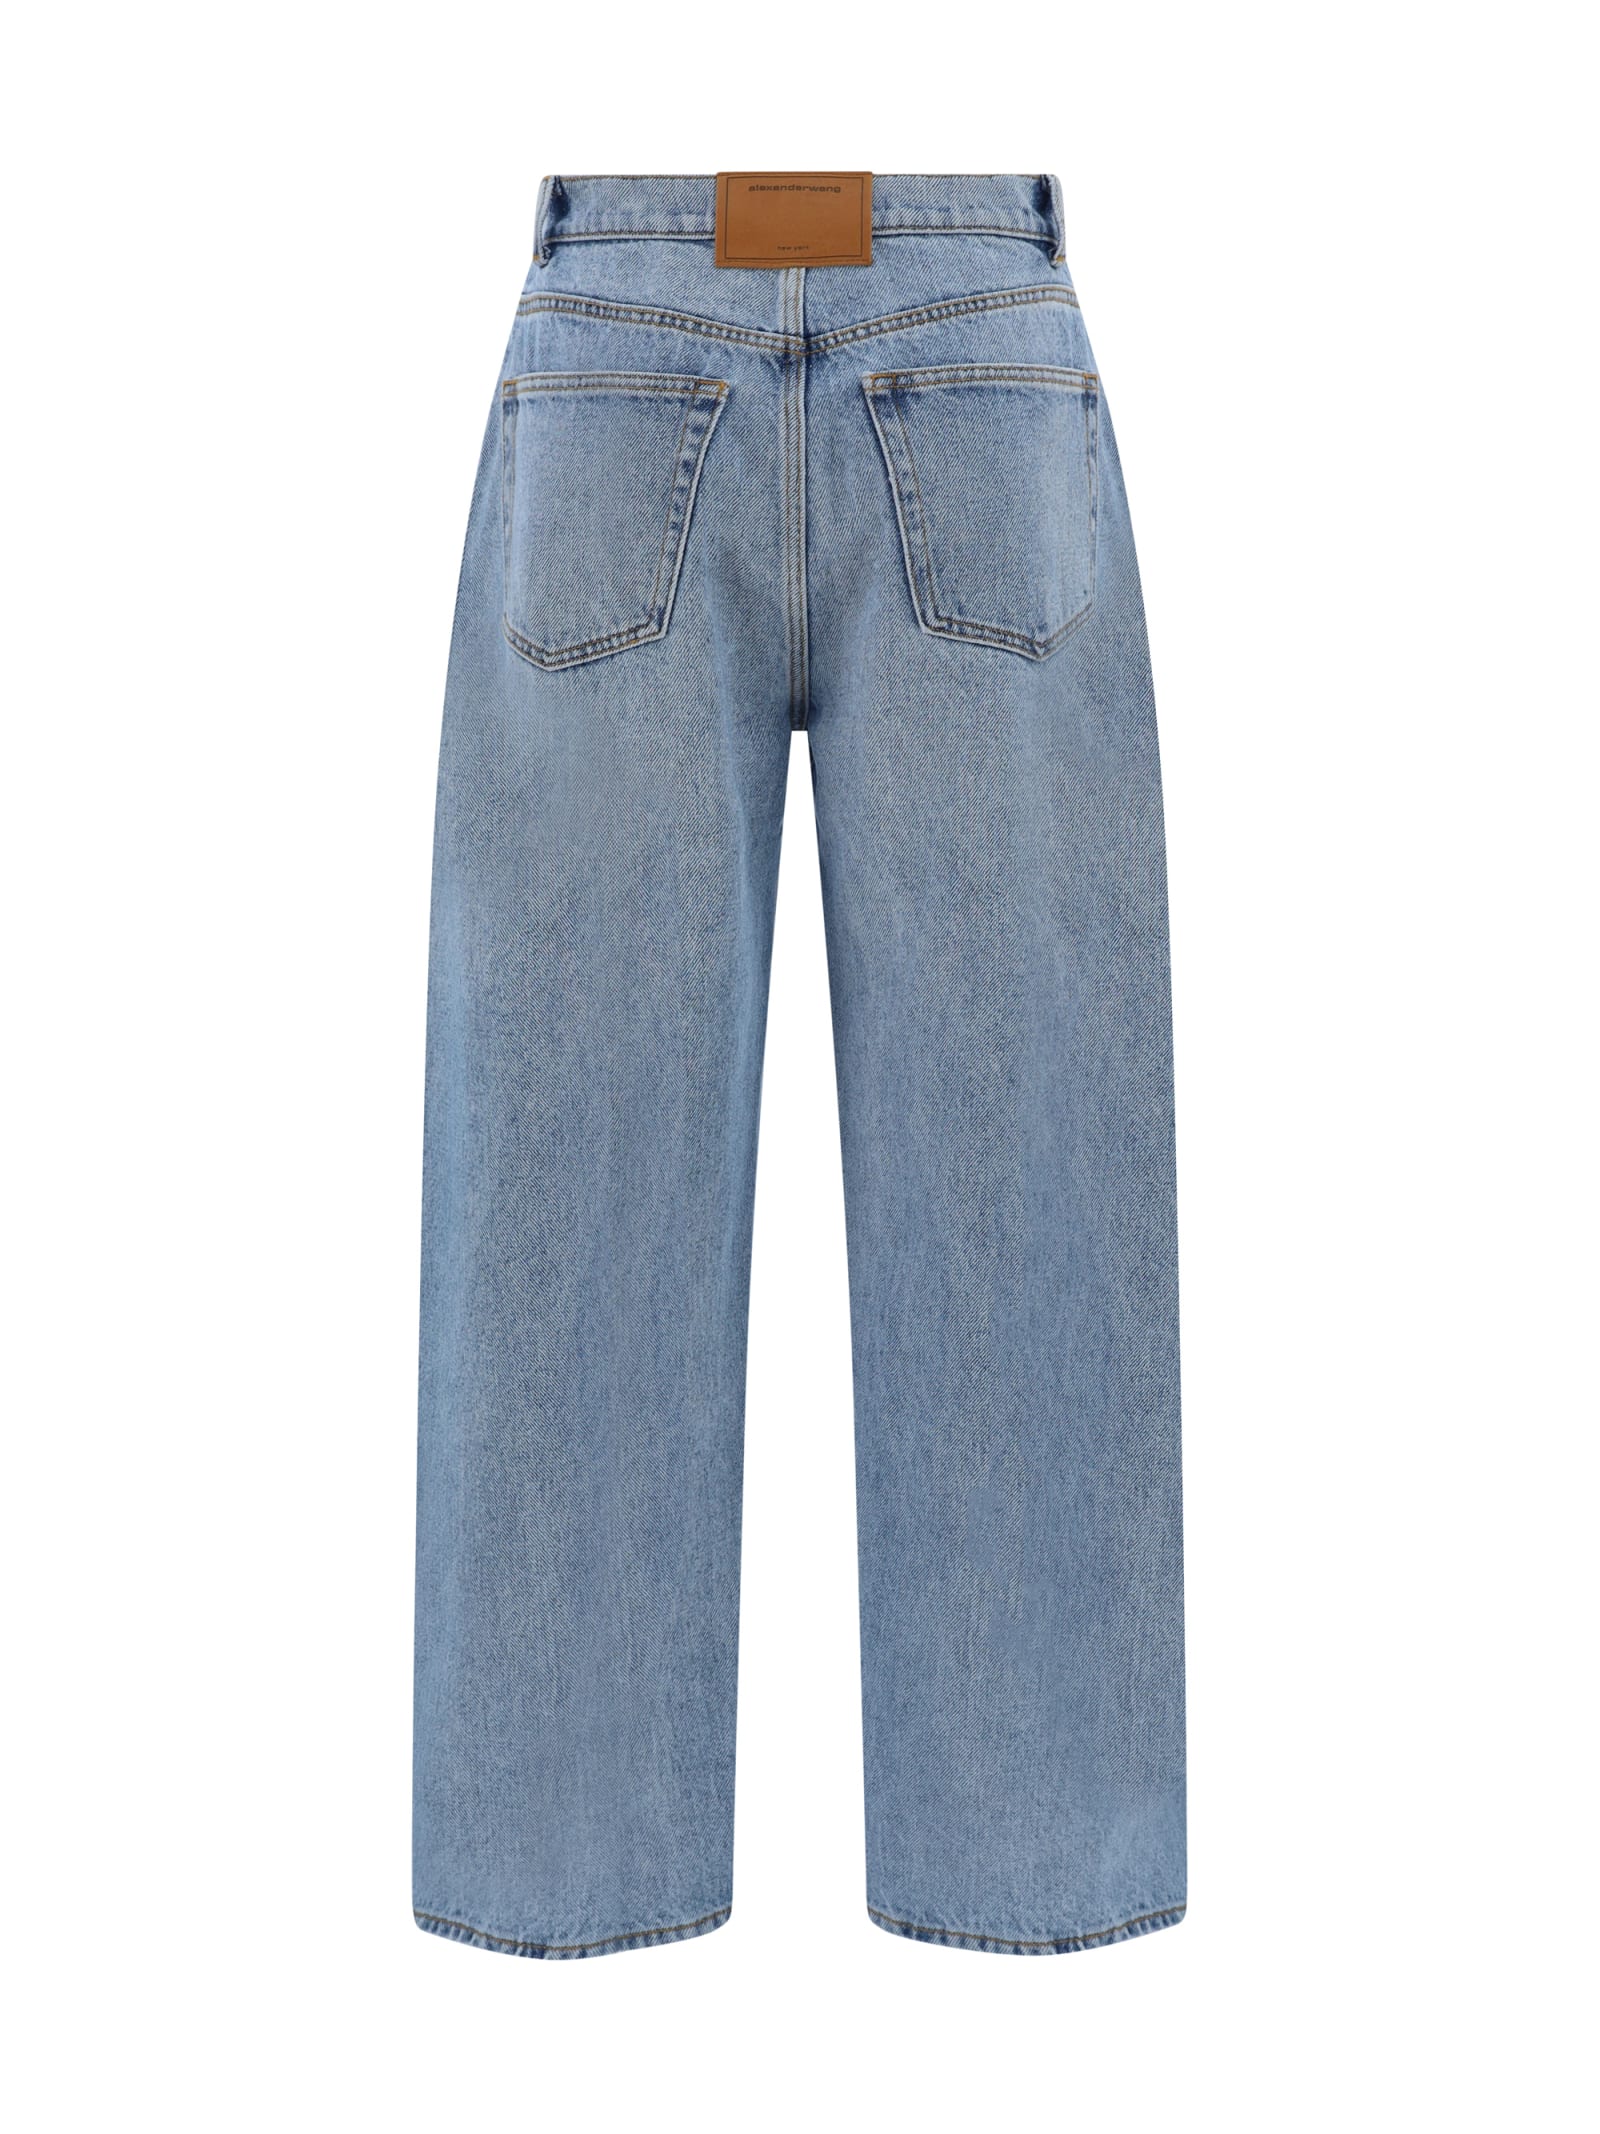 Shop Alexander Wang Jeans In A Classic Light Indigo